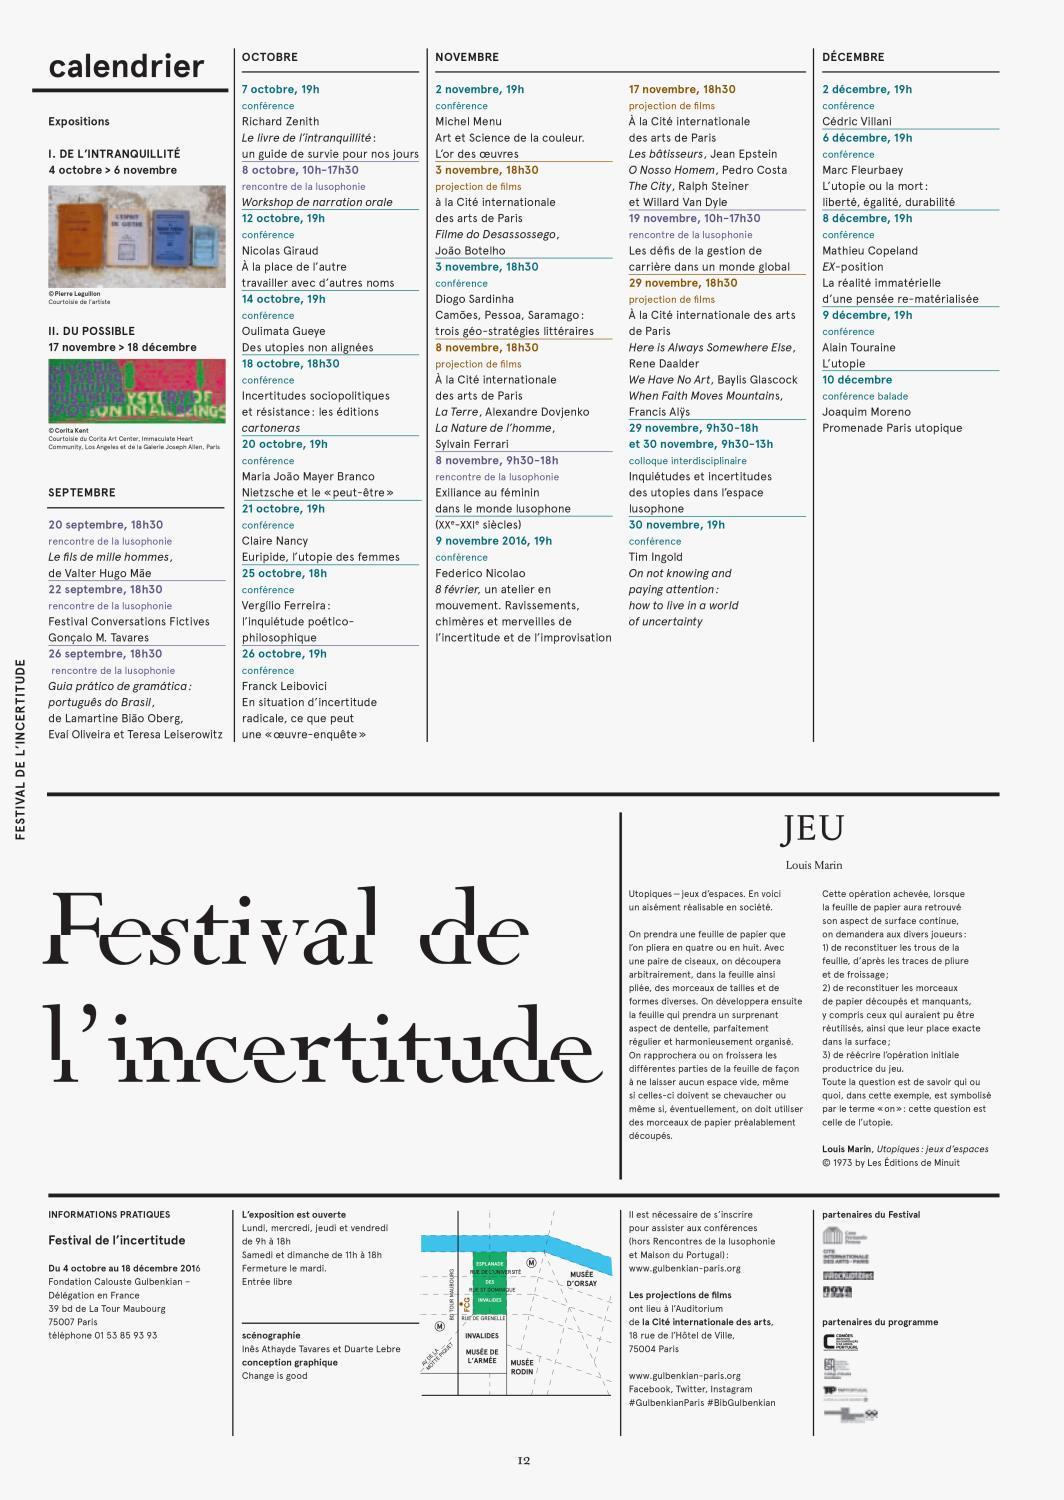 Fondation_Festival_Incertitude_1.12